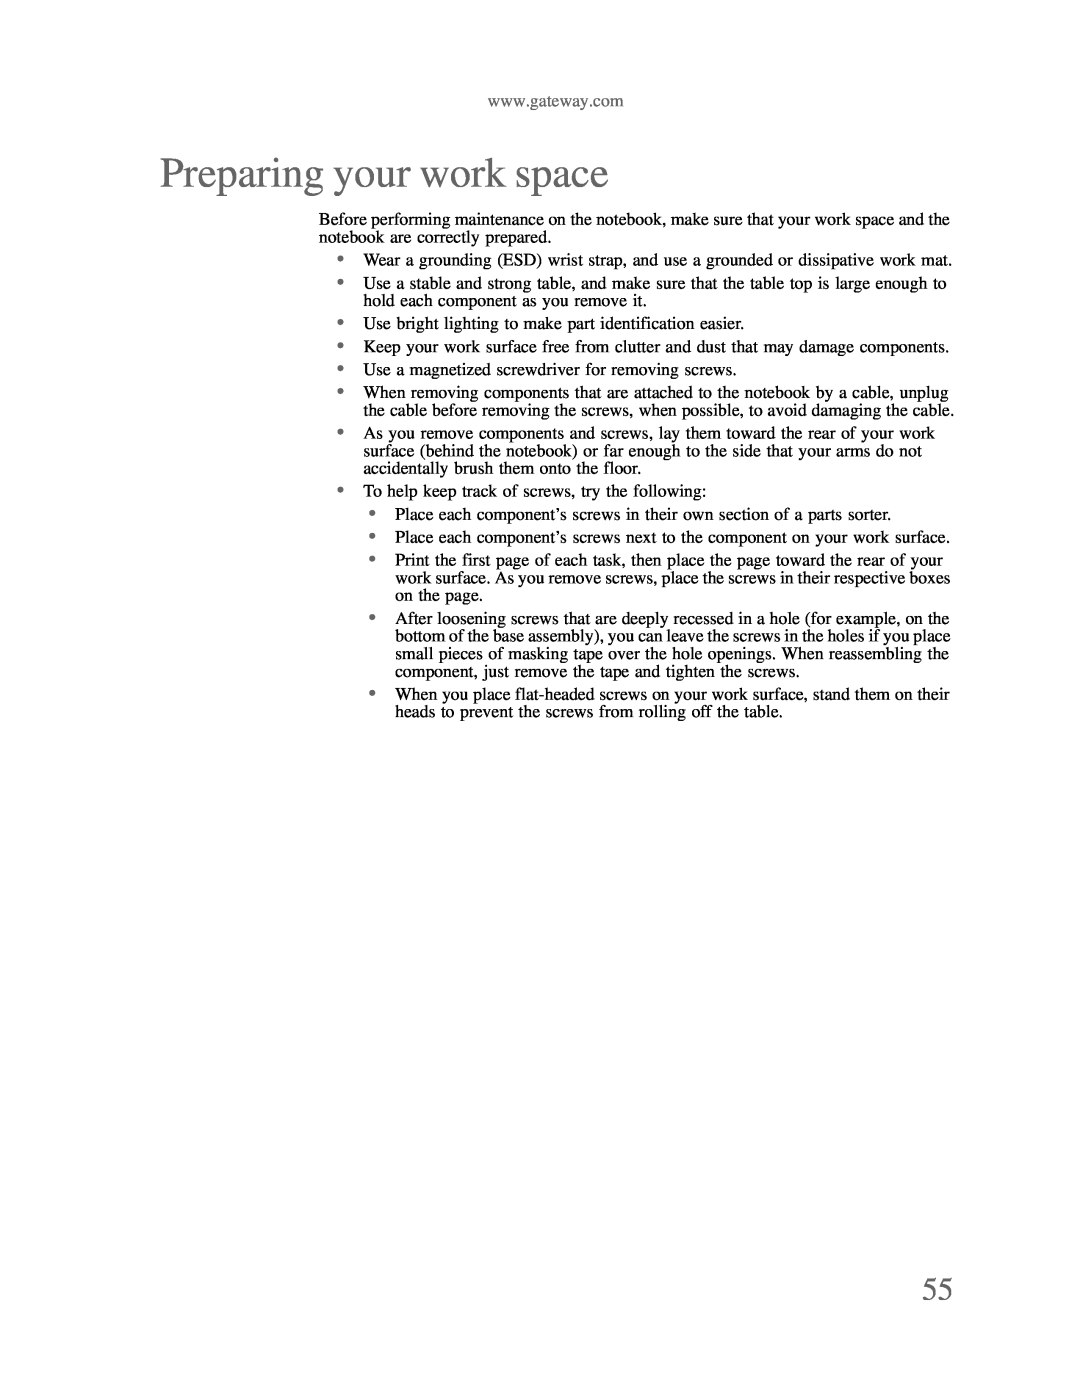 Gateway p-79 manual Preparing your work space 